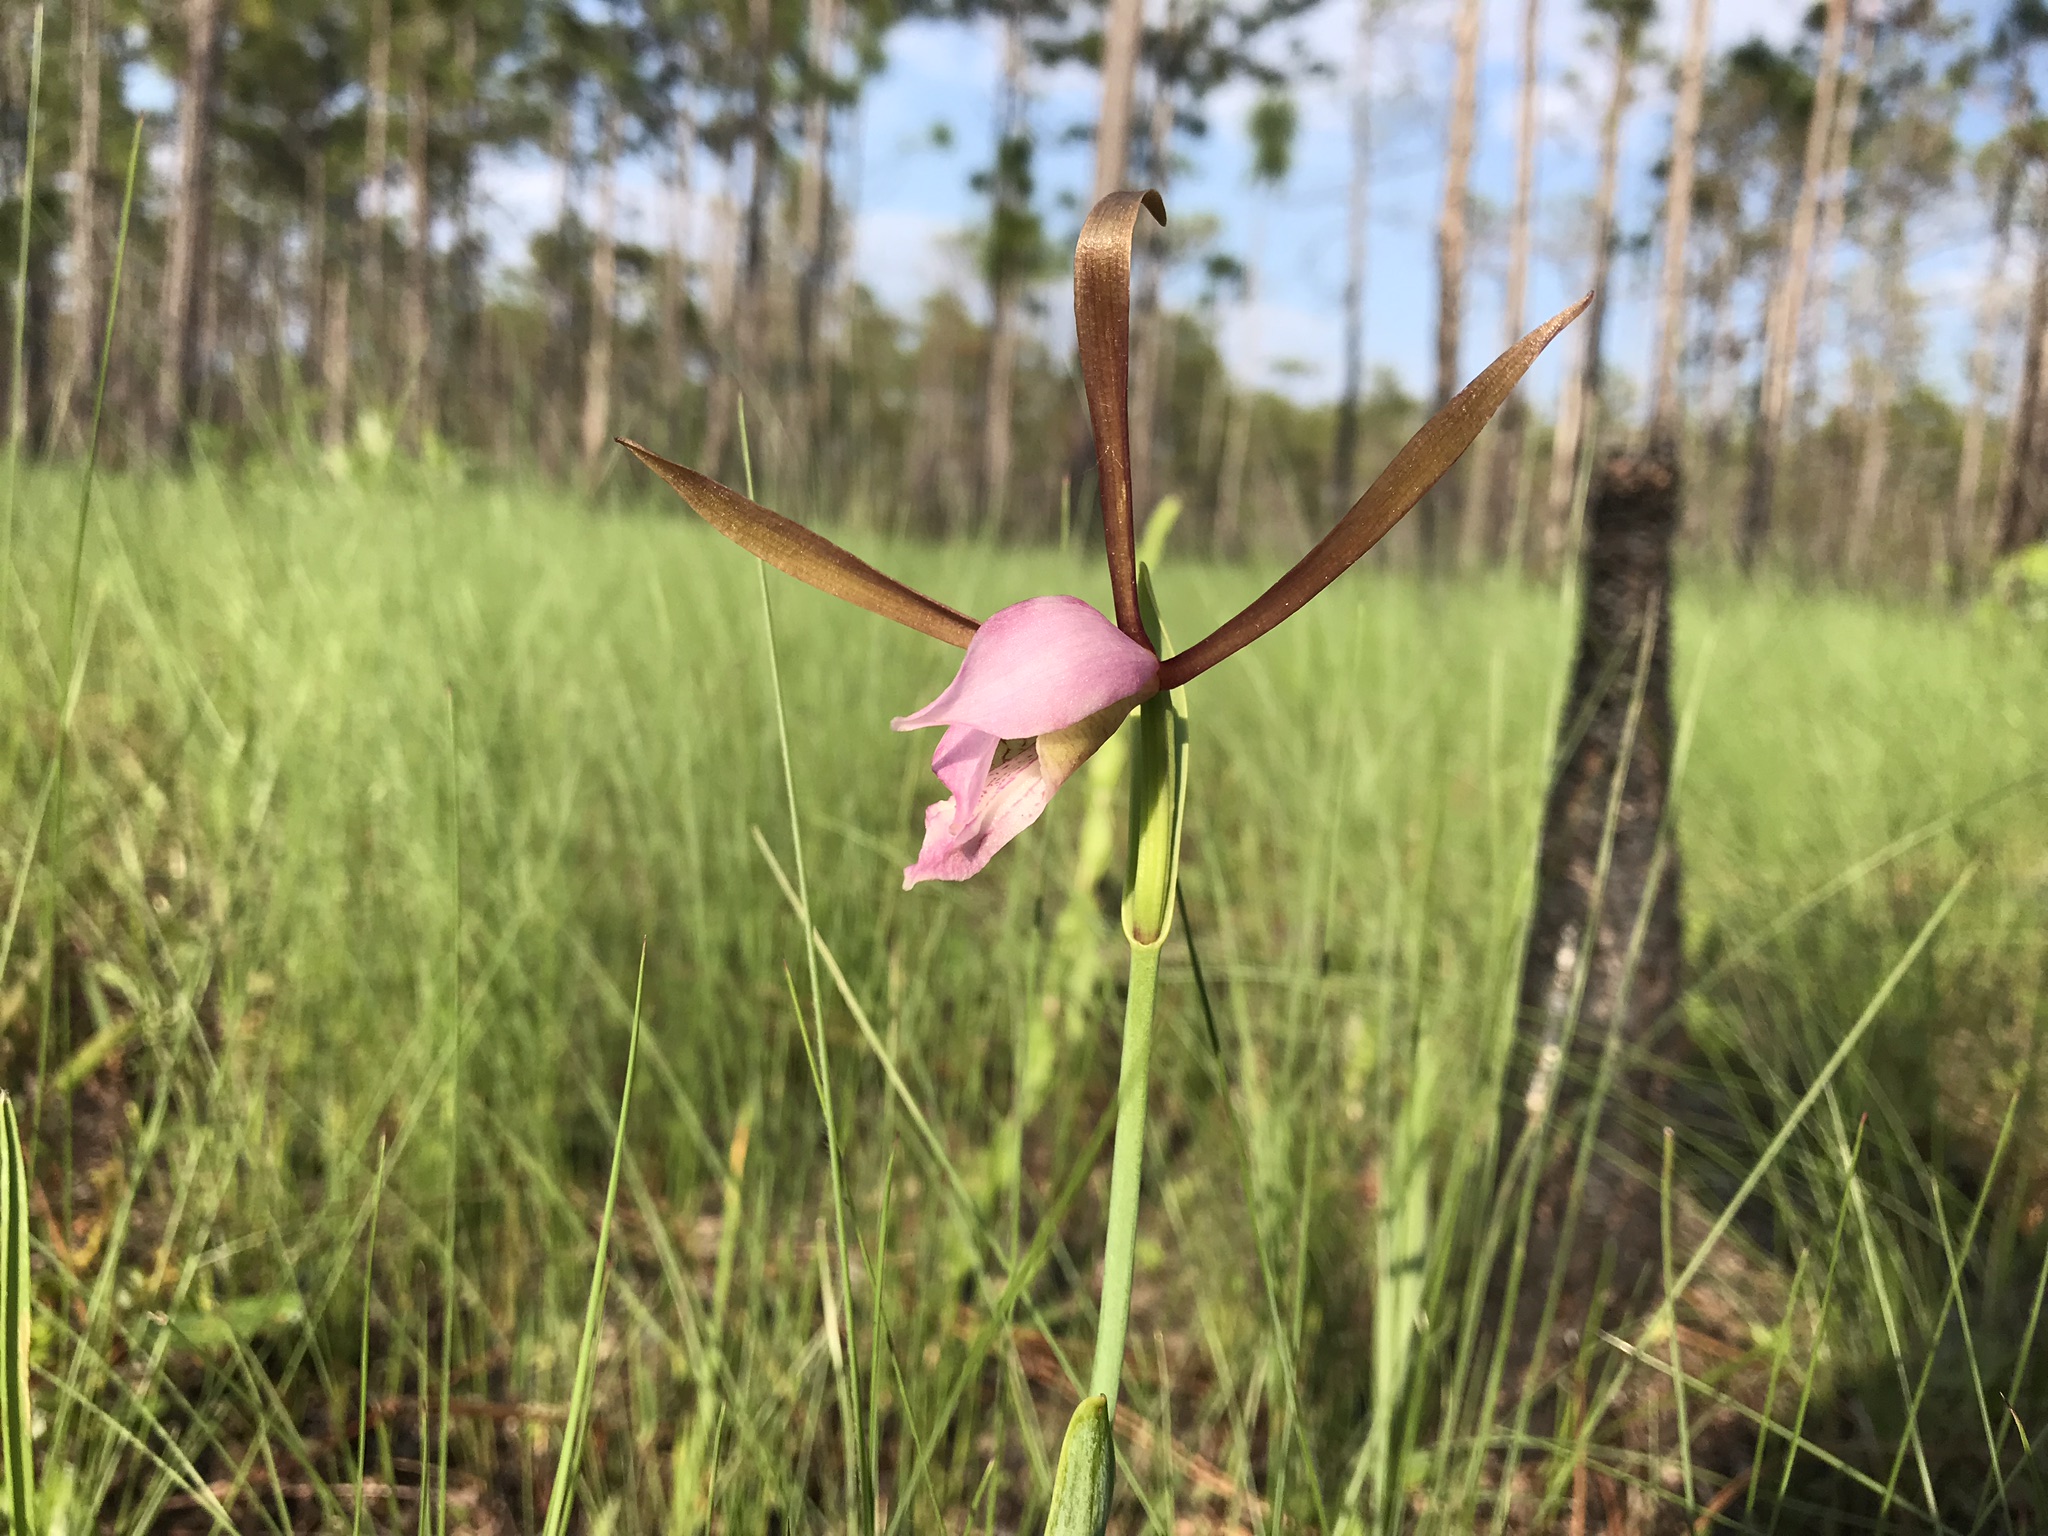 Coastal plain pogonia (Cleistesiopsis oricamporum), a beautiful native orchid.